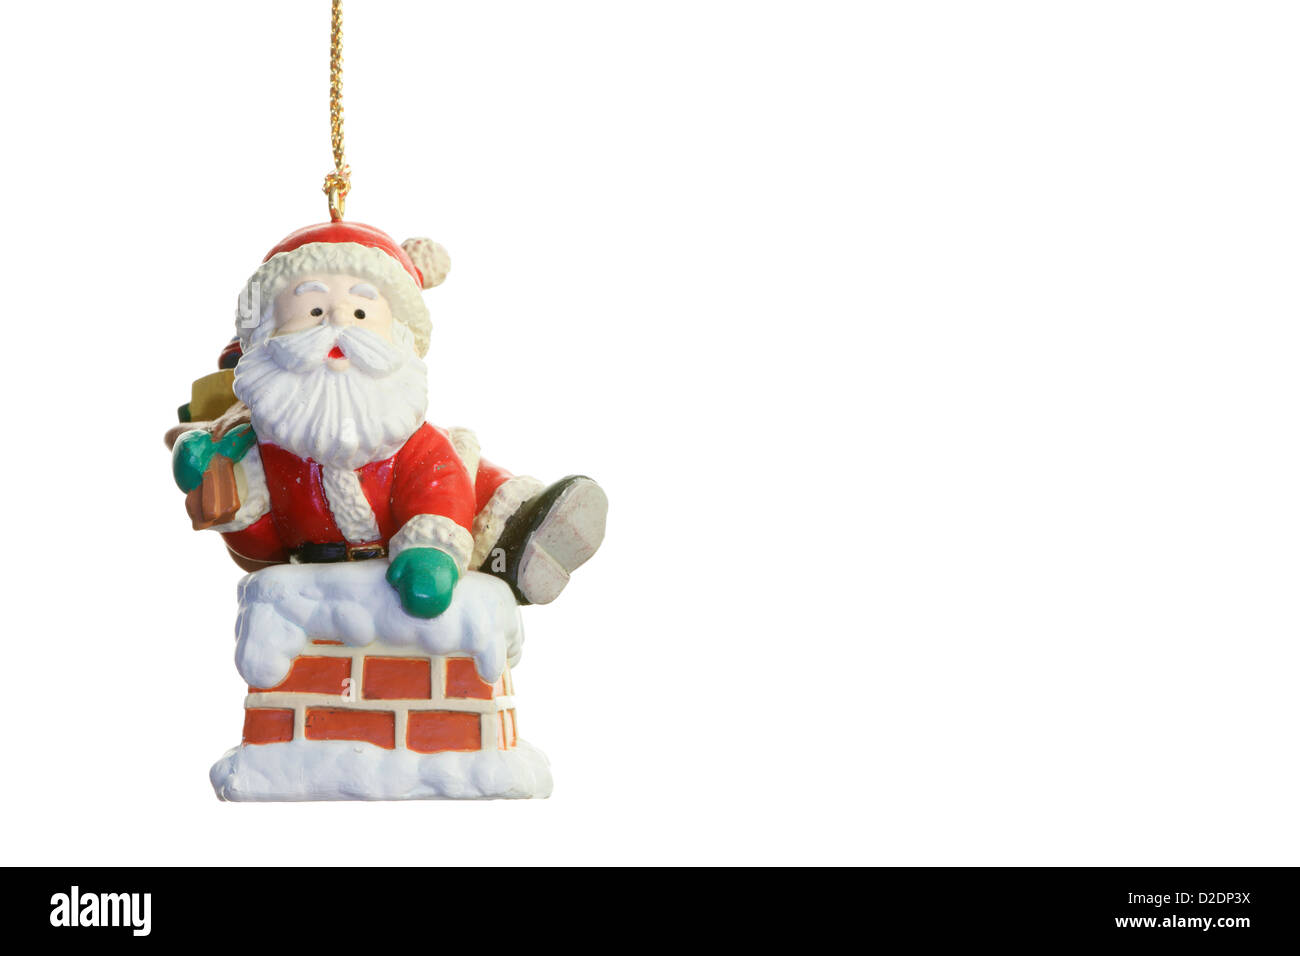 Santa Claus and chimney Christmas decoration on white background Stock Photo